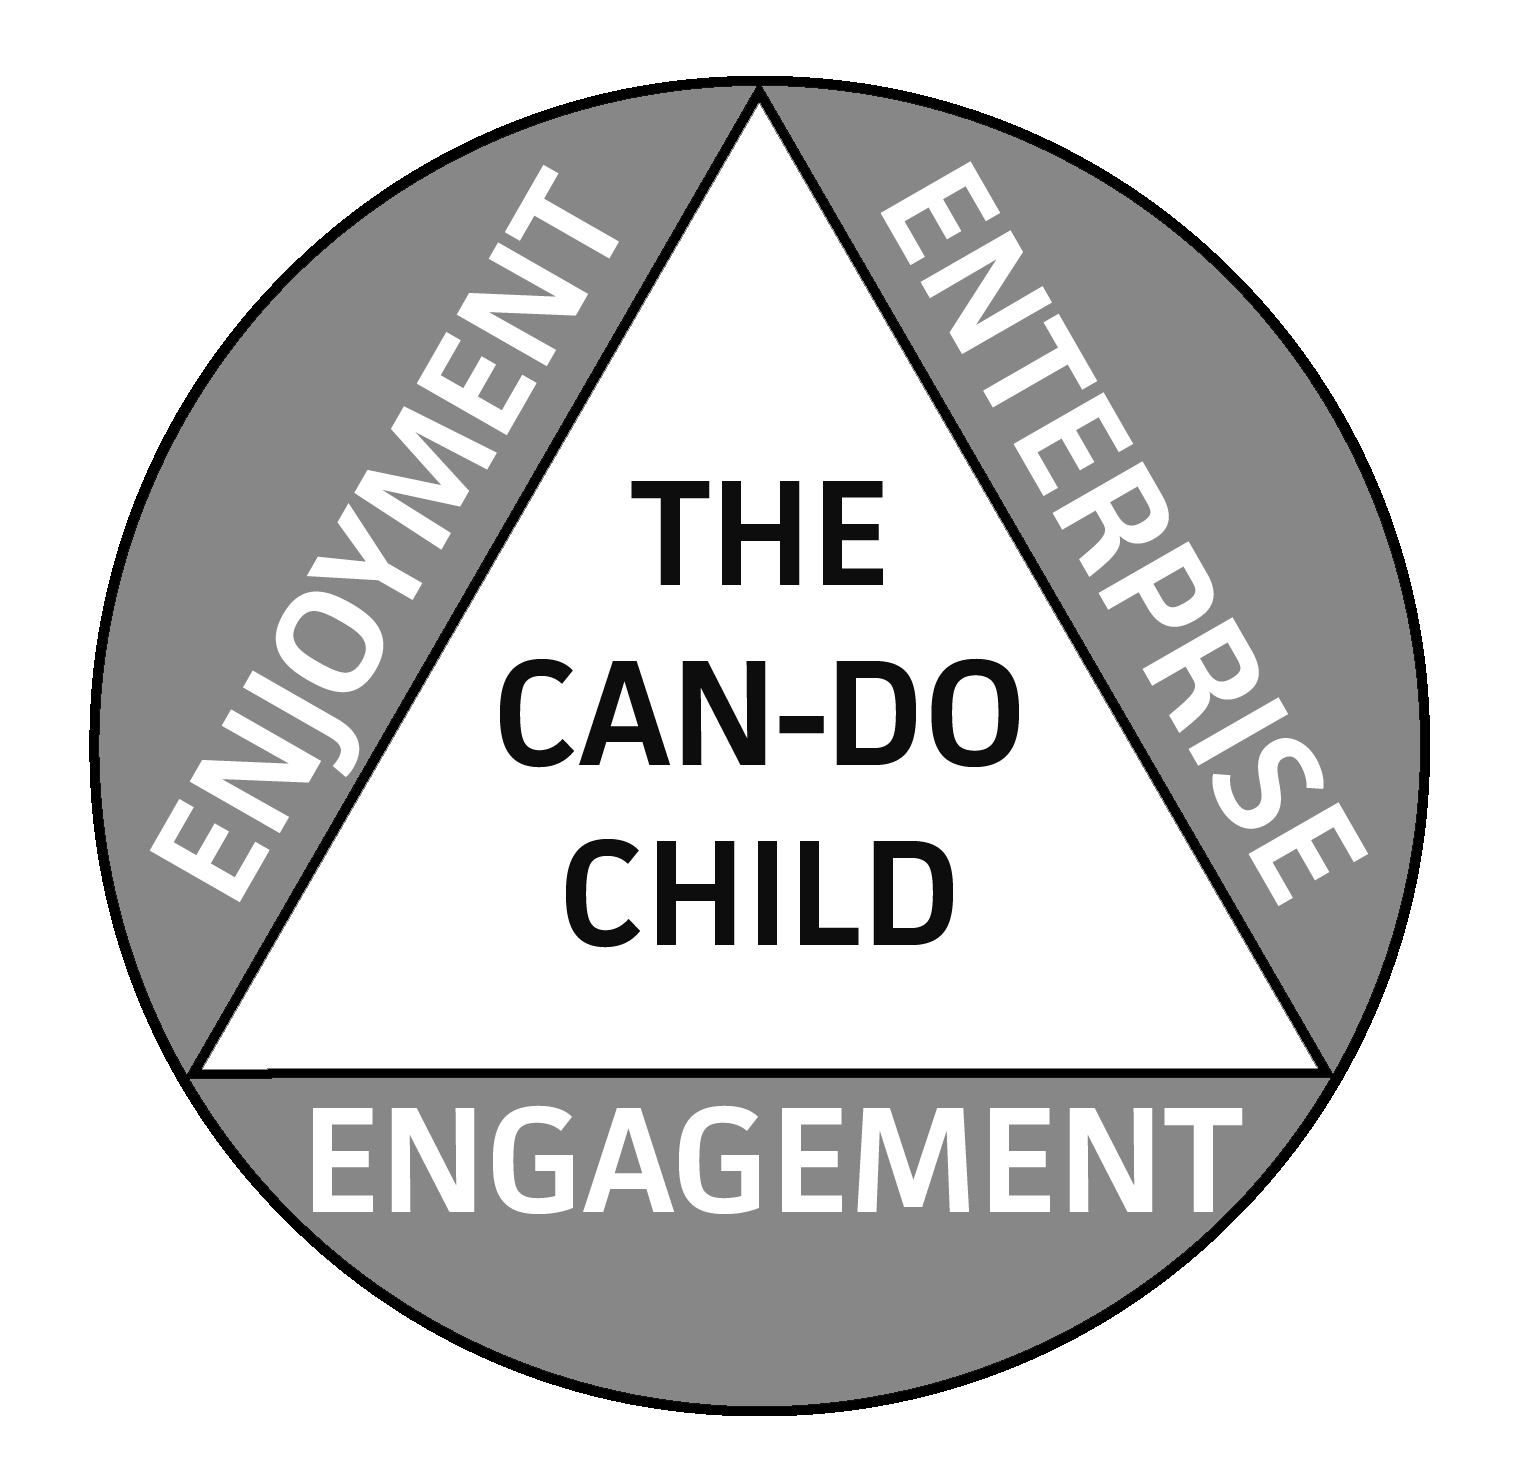 Three Es Can-Do Child philosophy